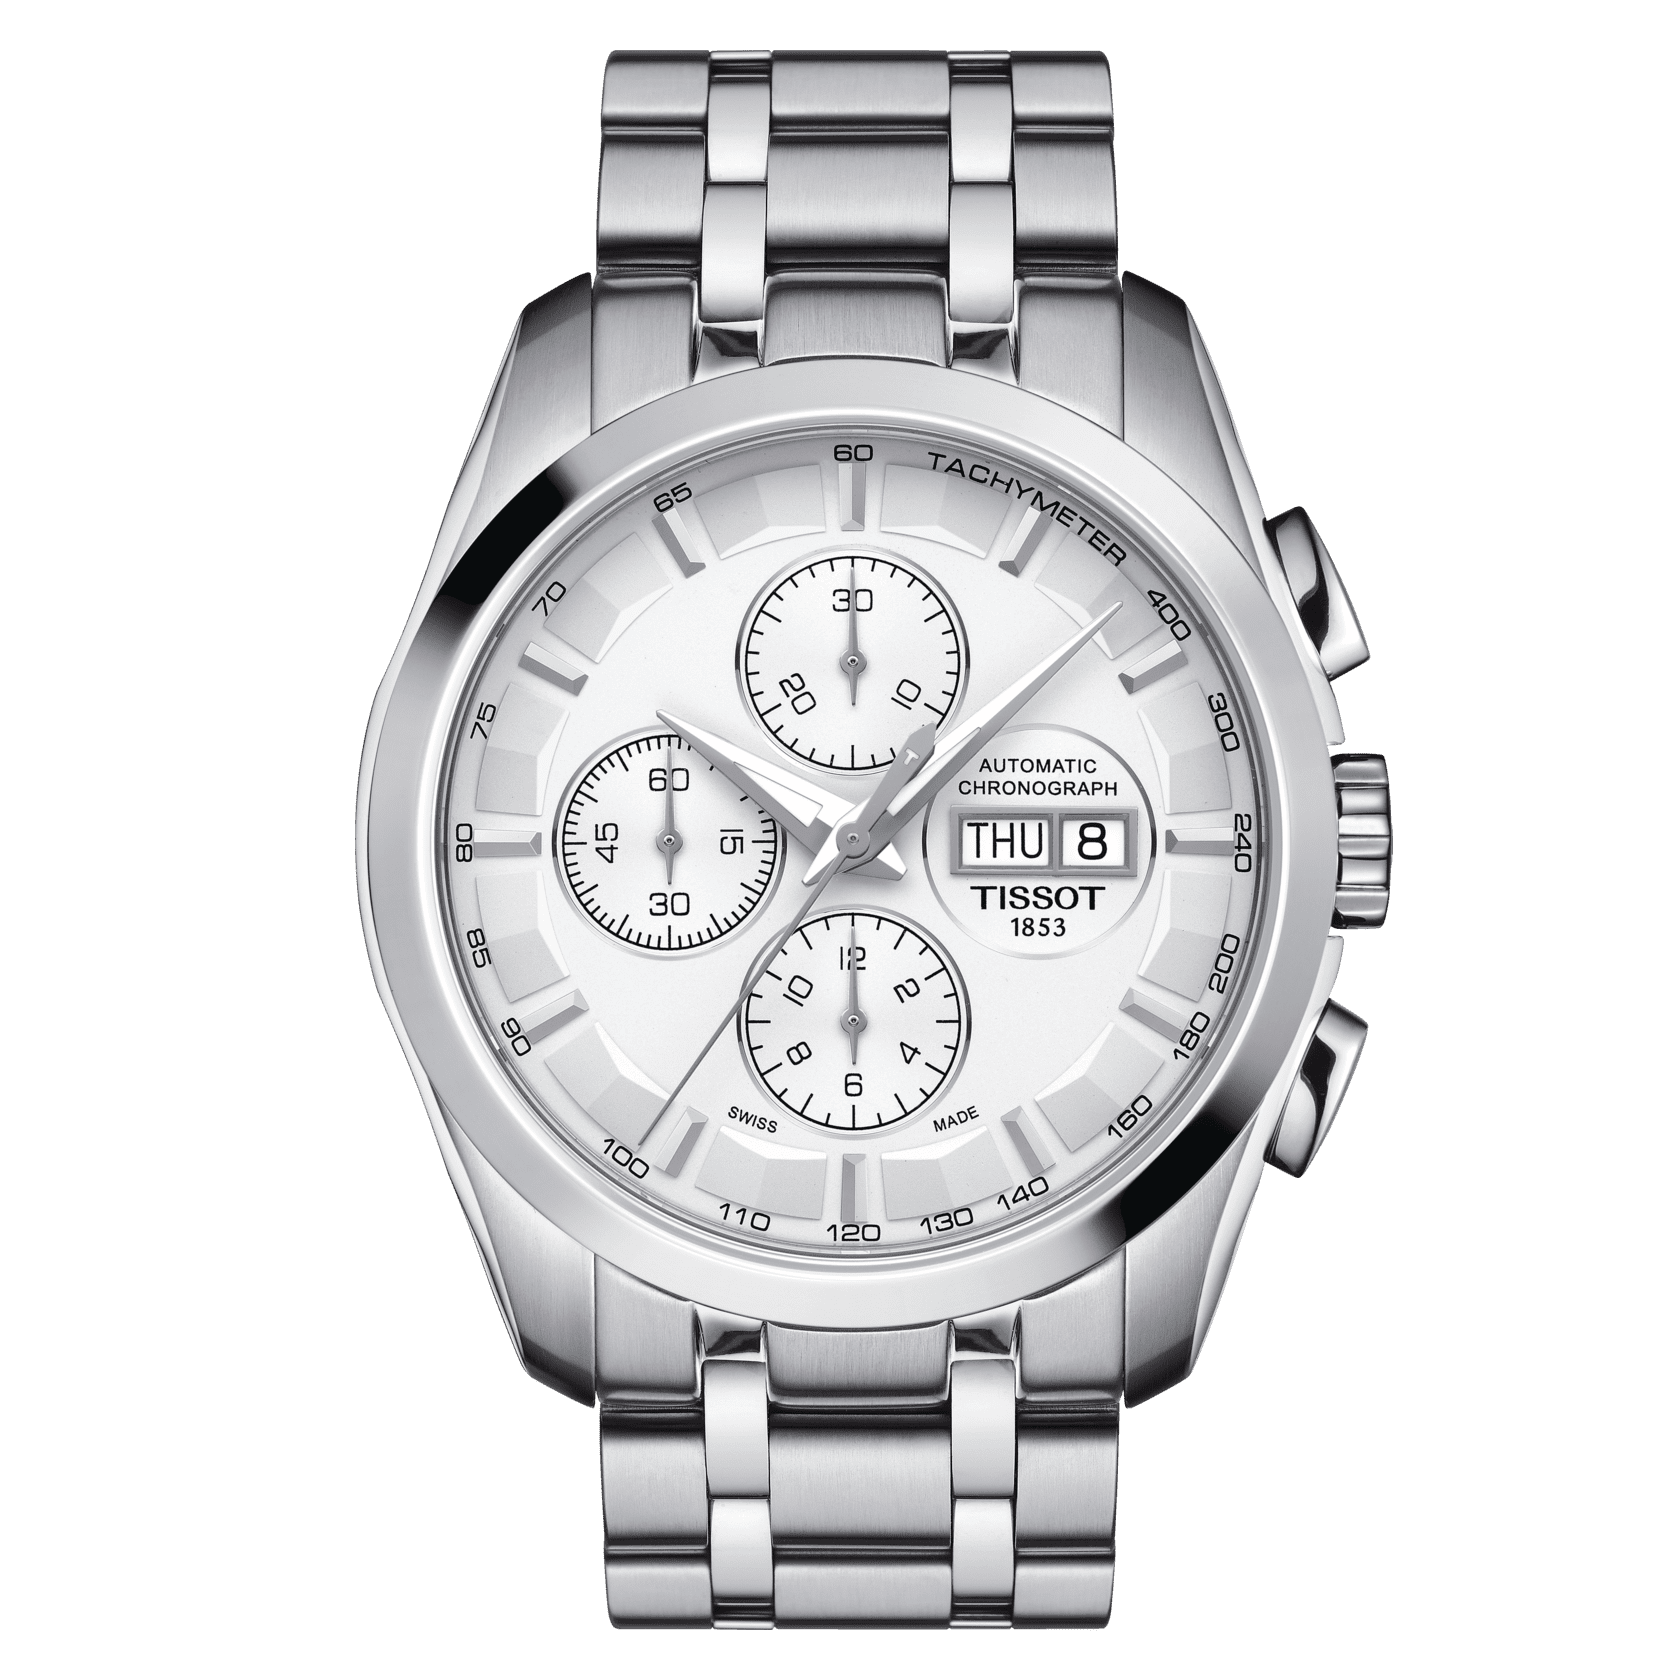 Replica Swiss Watches Information